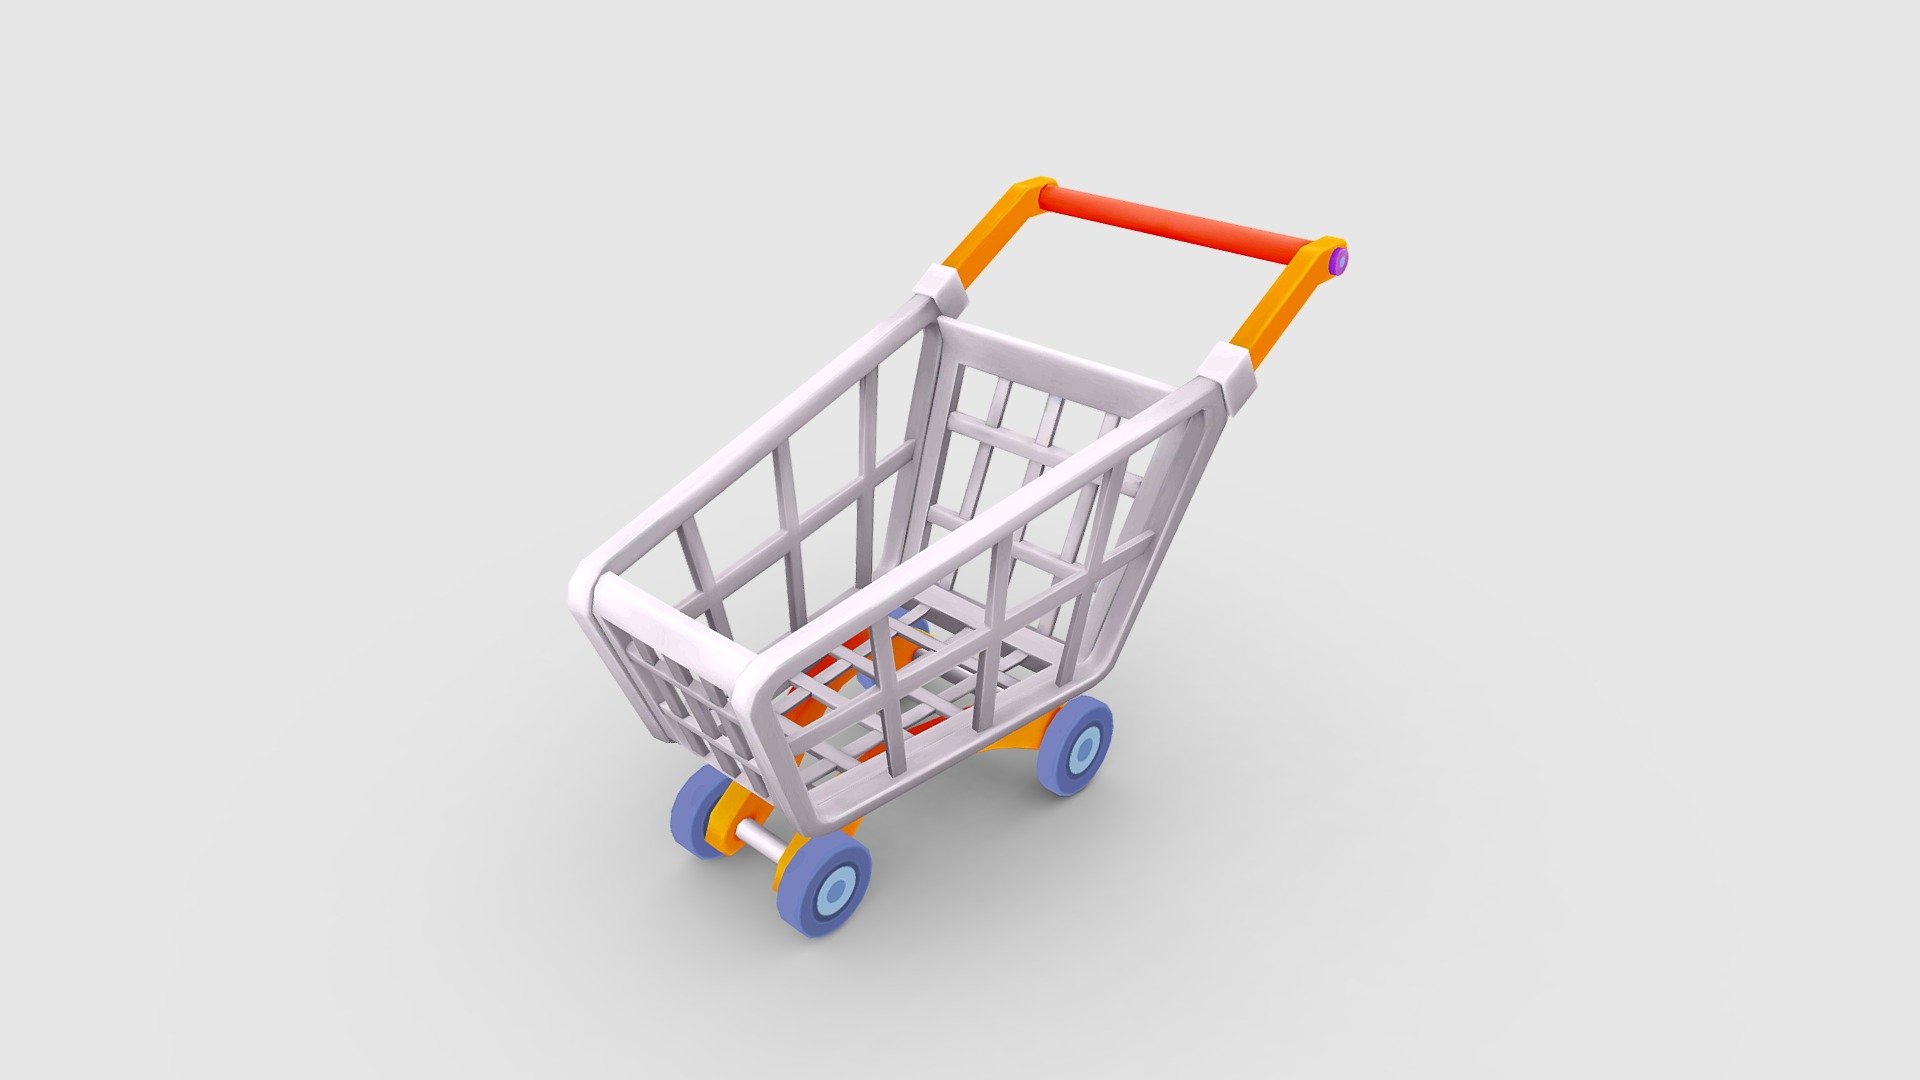 grocery cart illustration